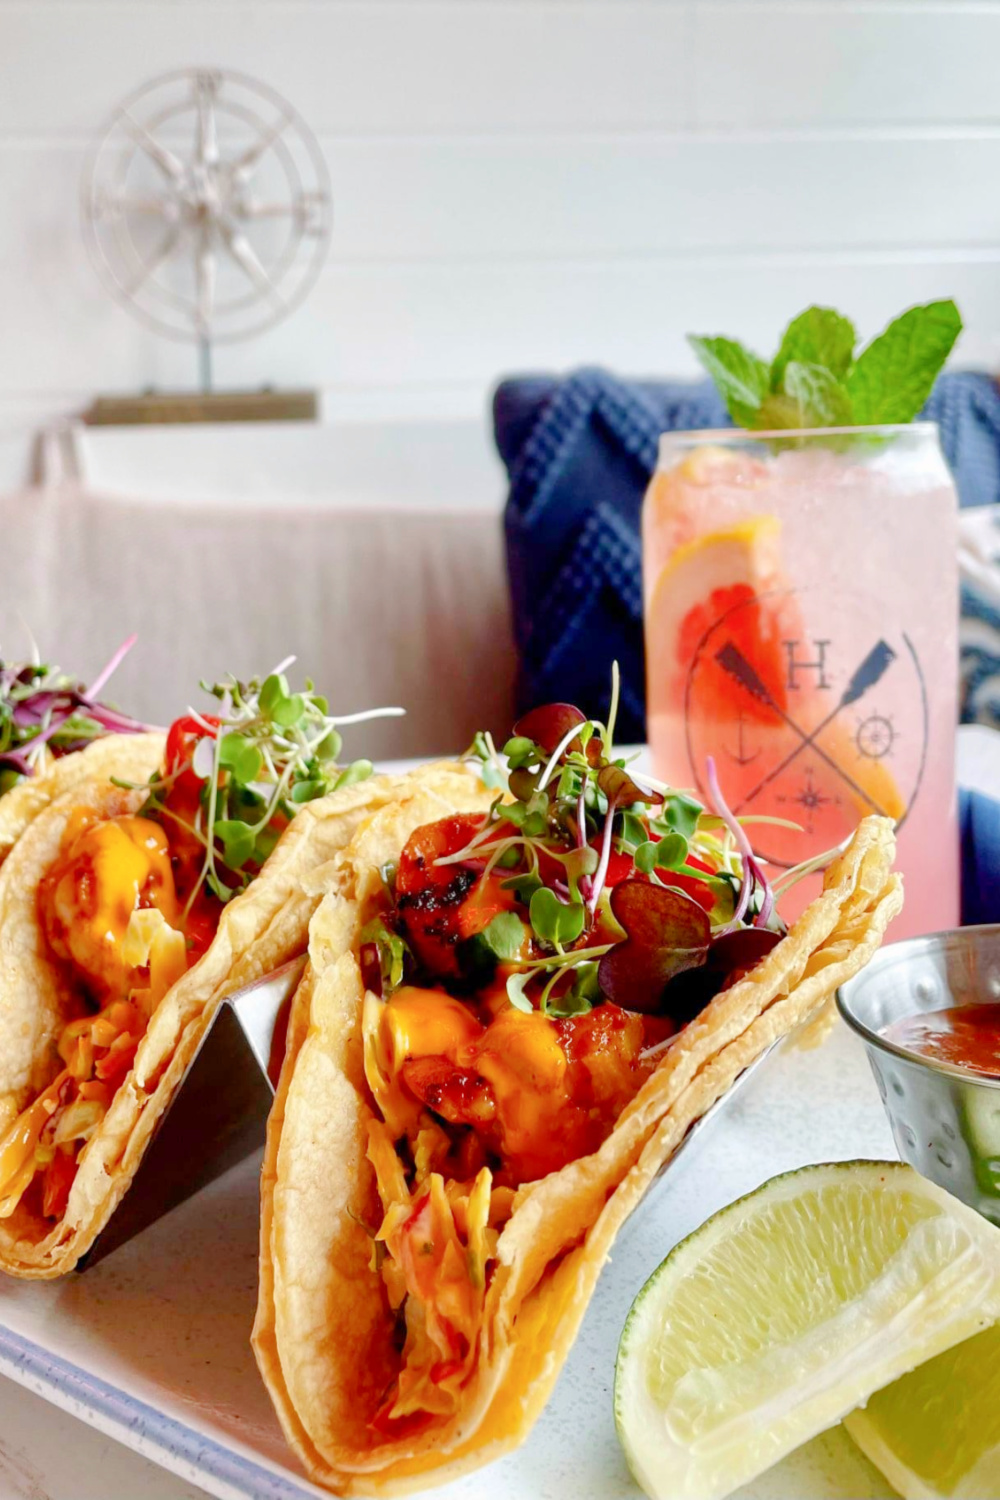 Shrimp tacos and tequila at The Hampton Social. #shrimptacos #thehamptonsocial